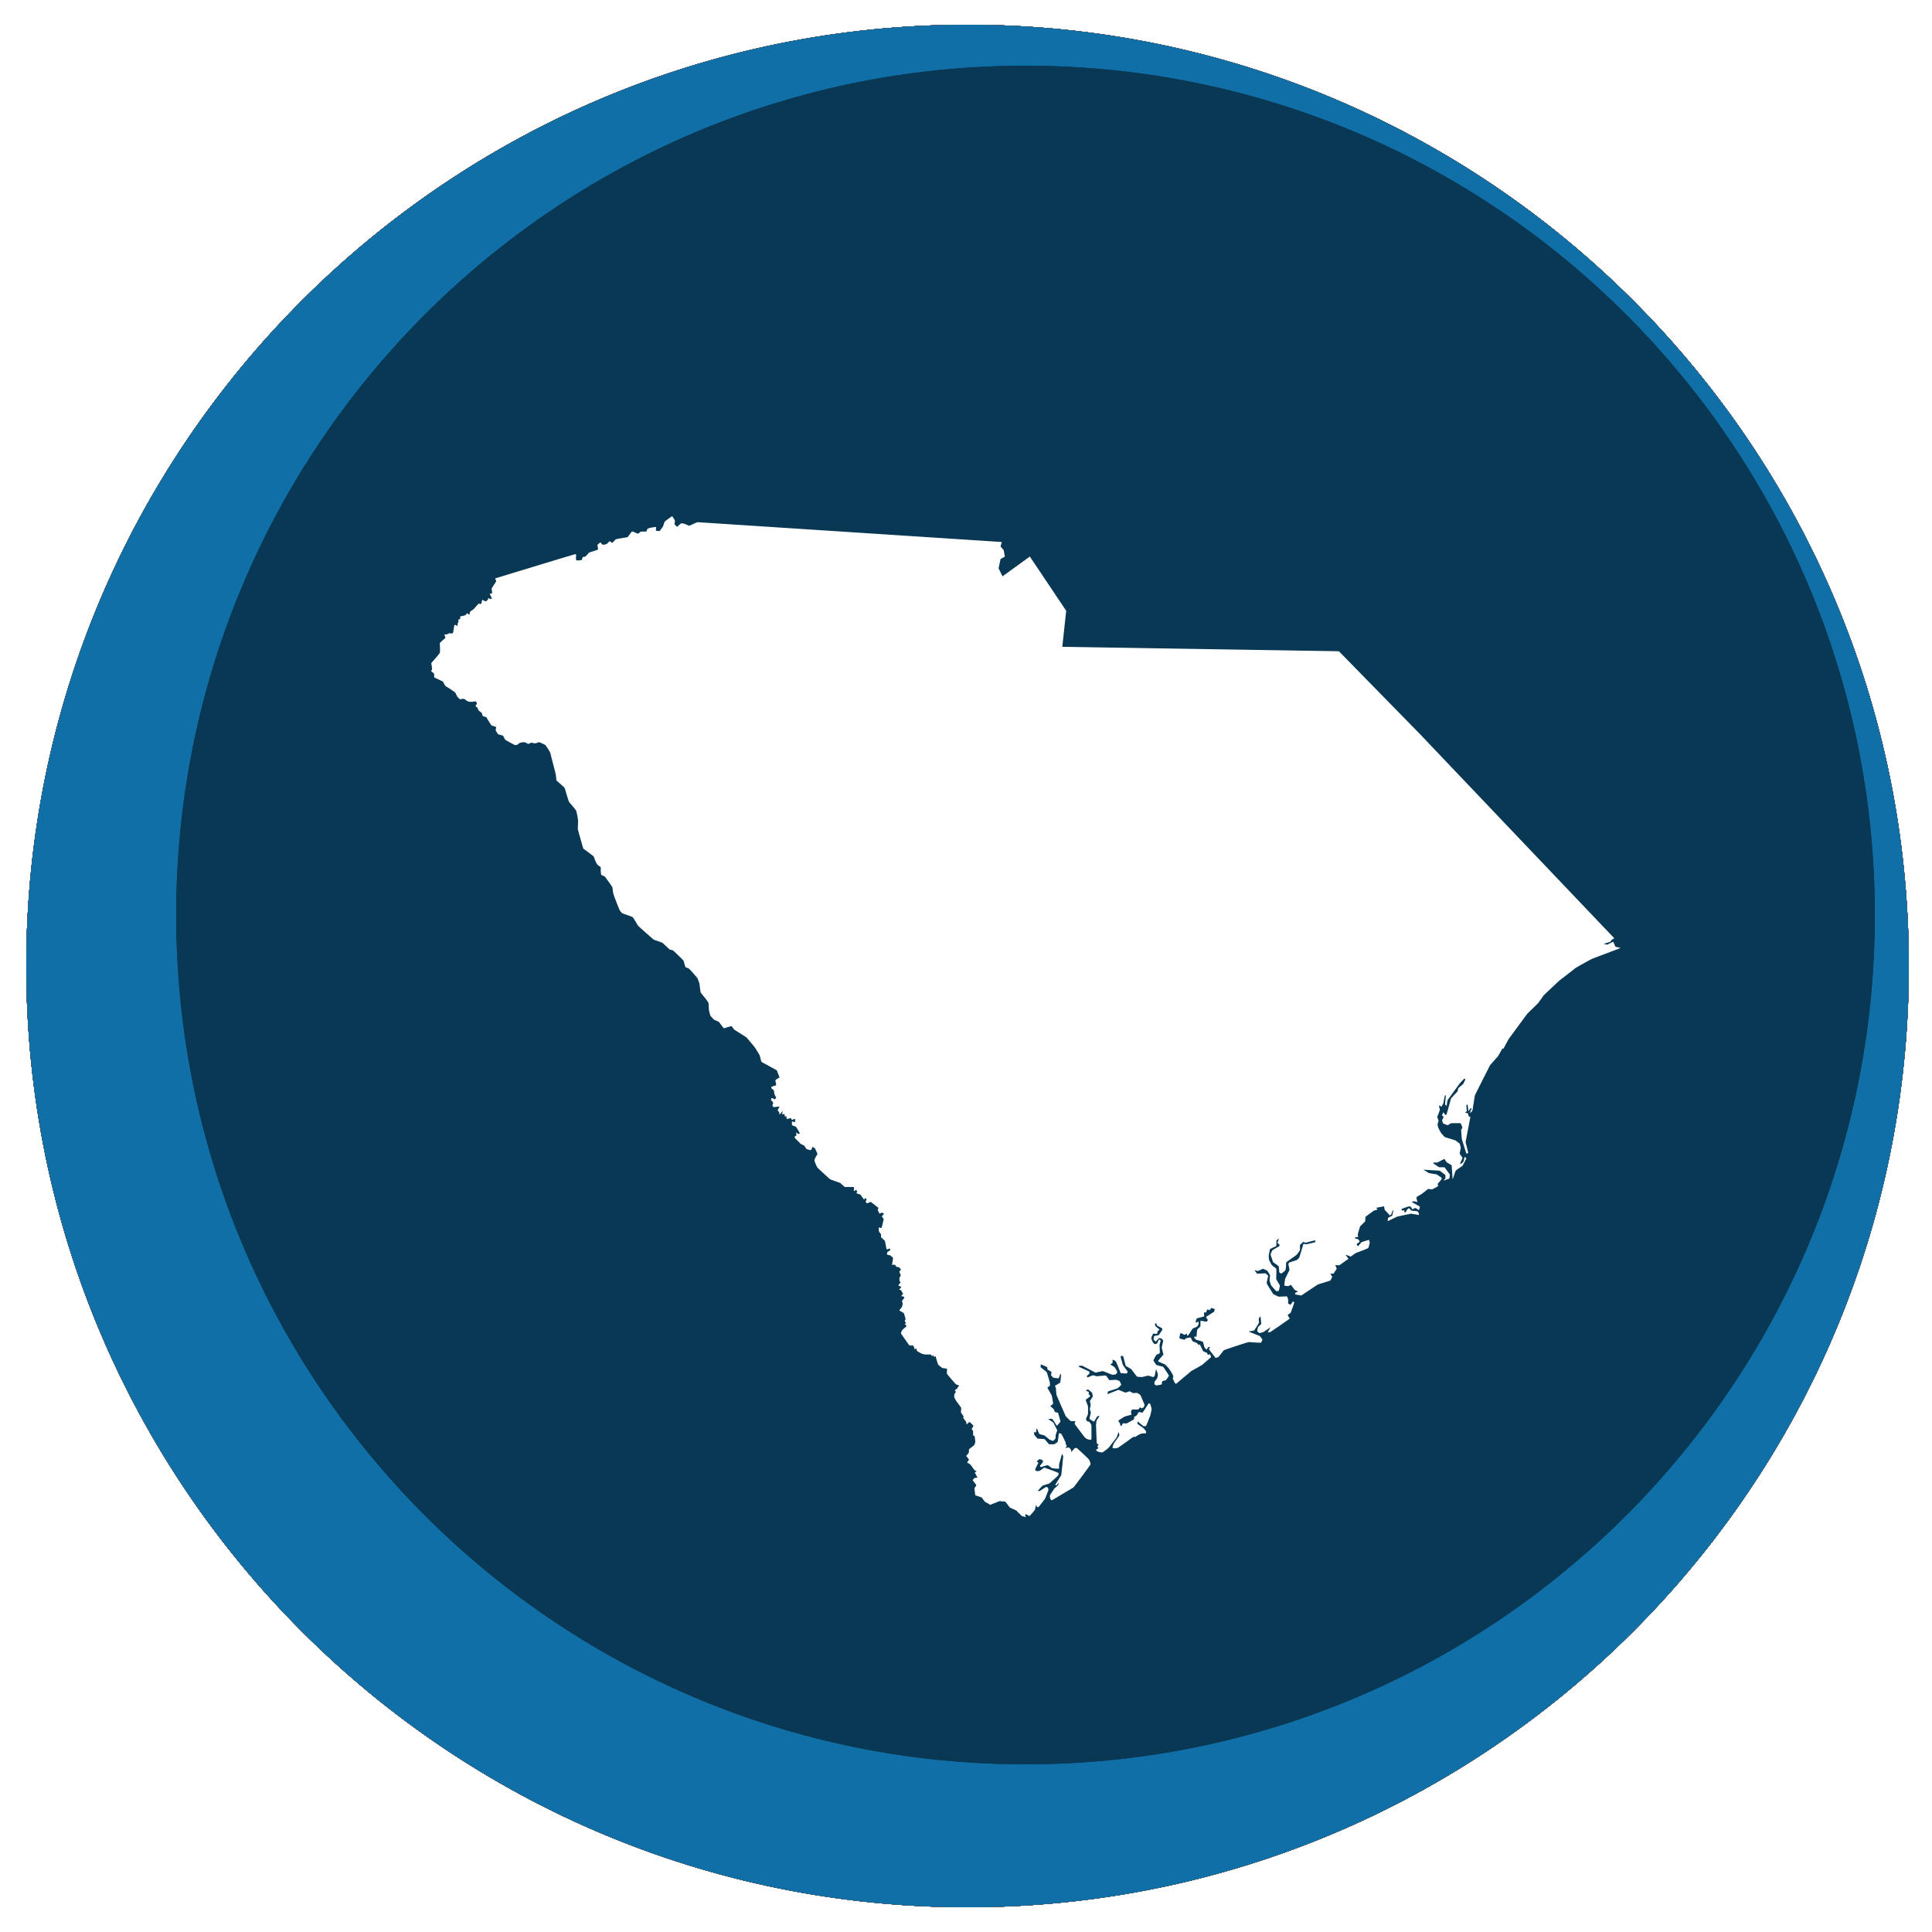 South Carolina state shape in a circle